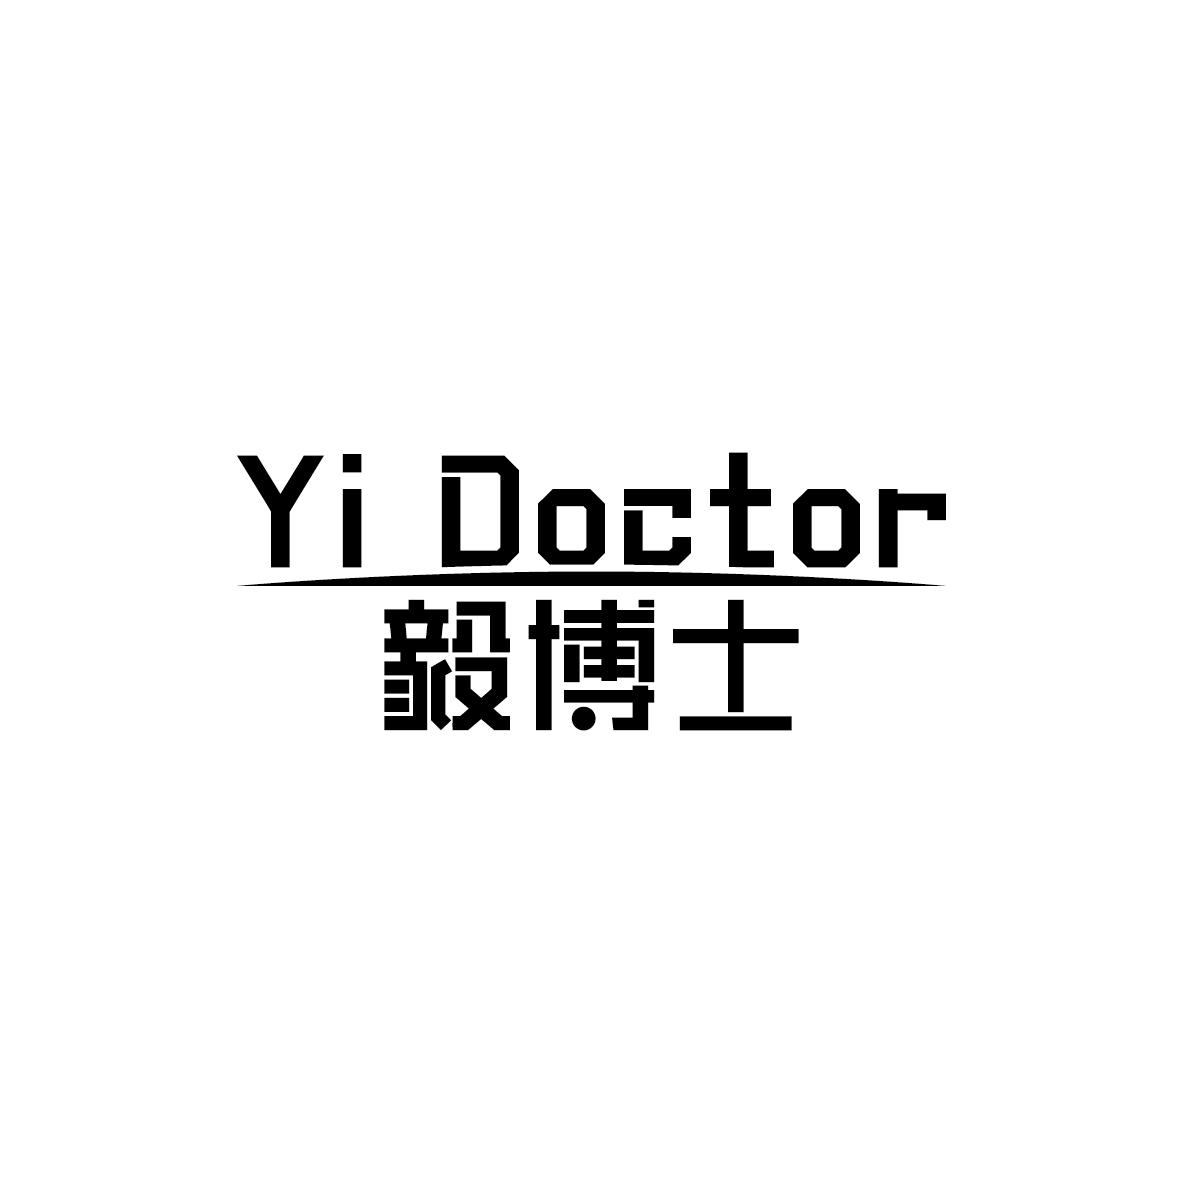 44类-医疗美容YI DOCTOR 毅博士商标转让